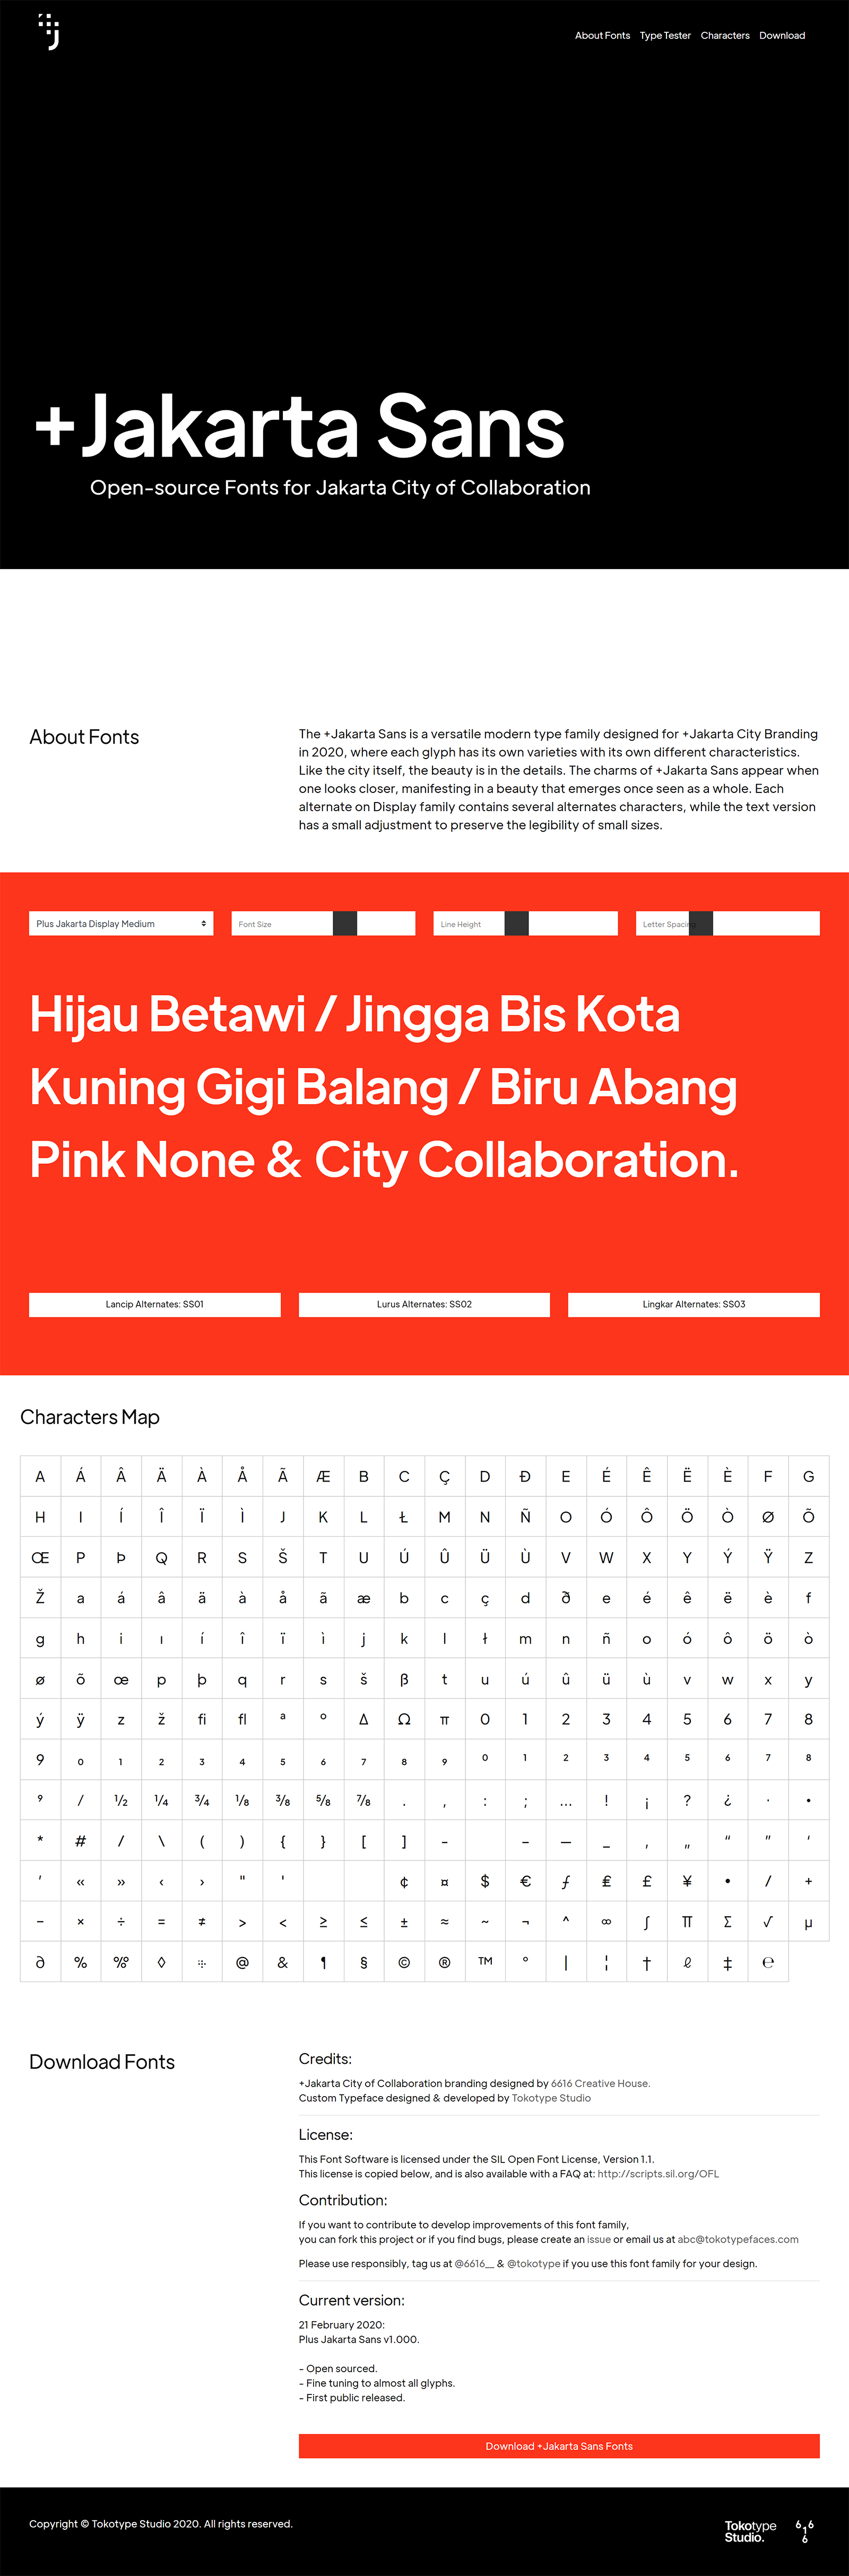 +Jakarta Sans Free Typeface